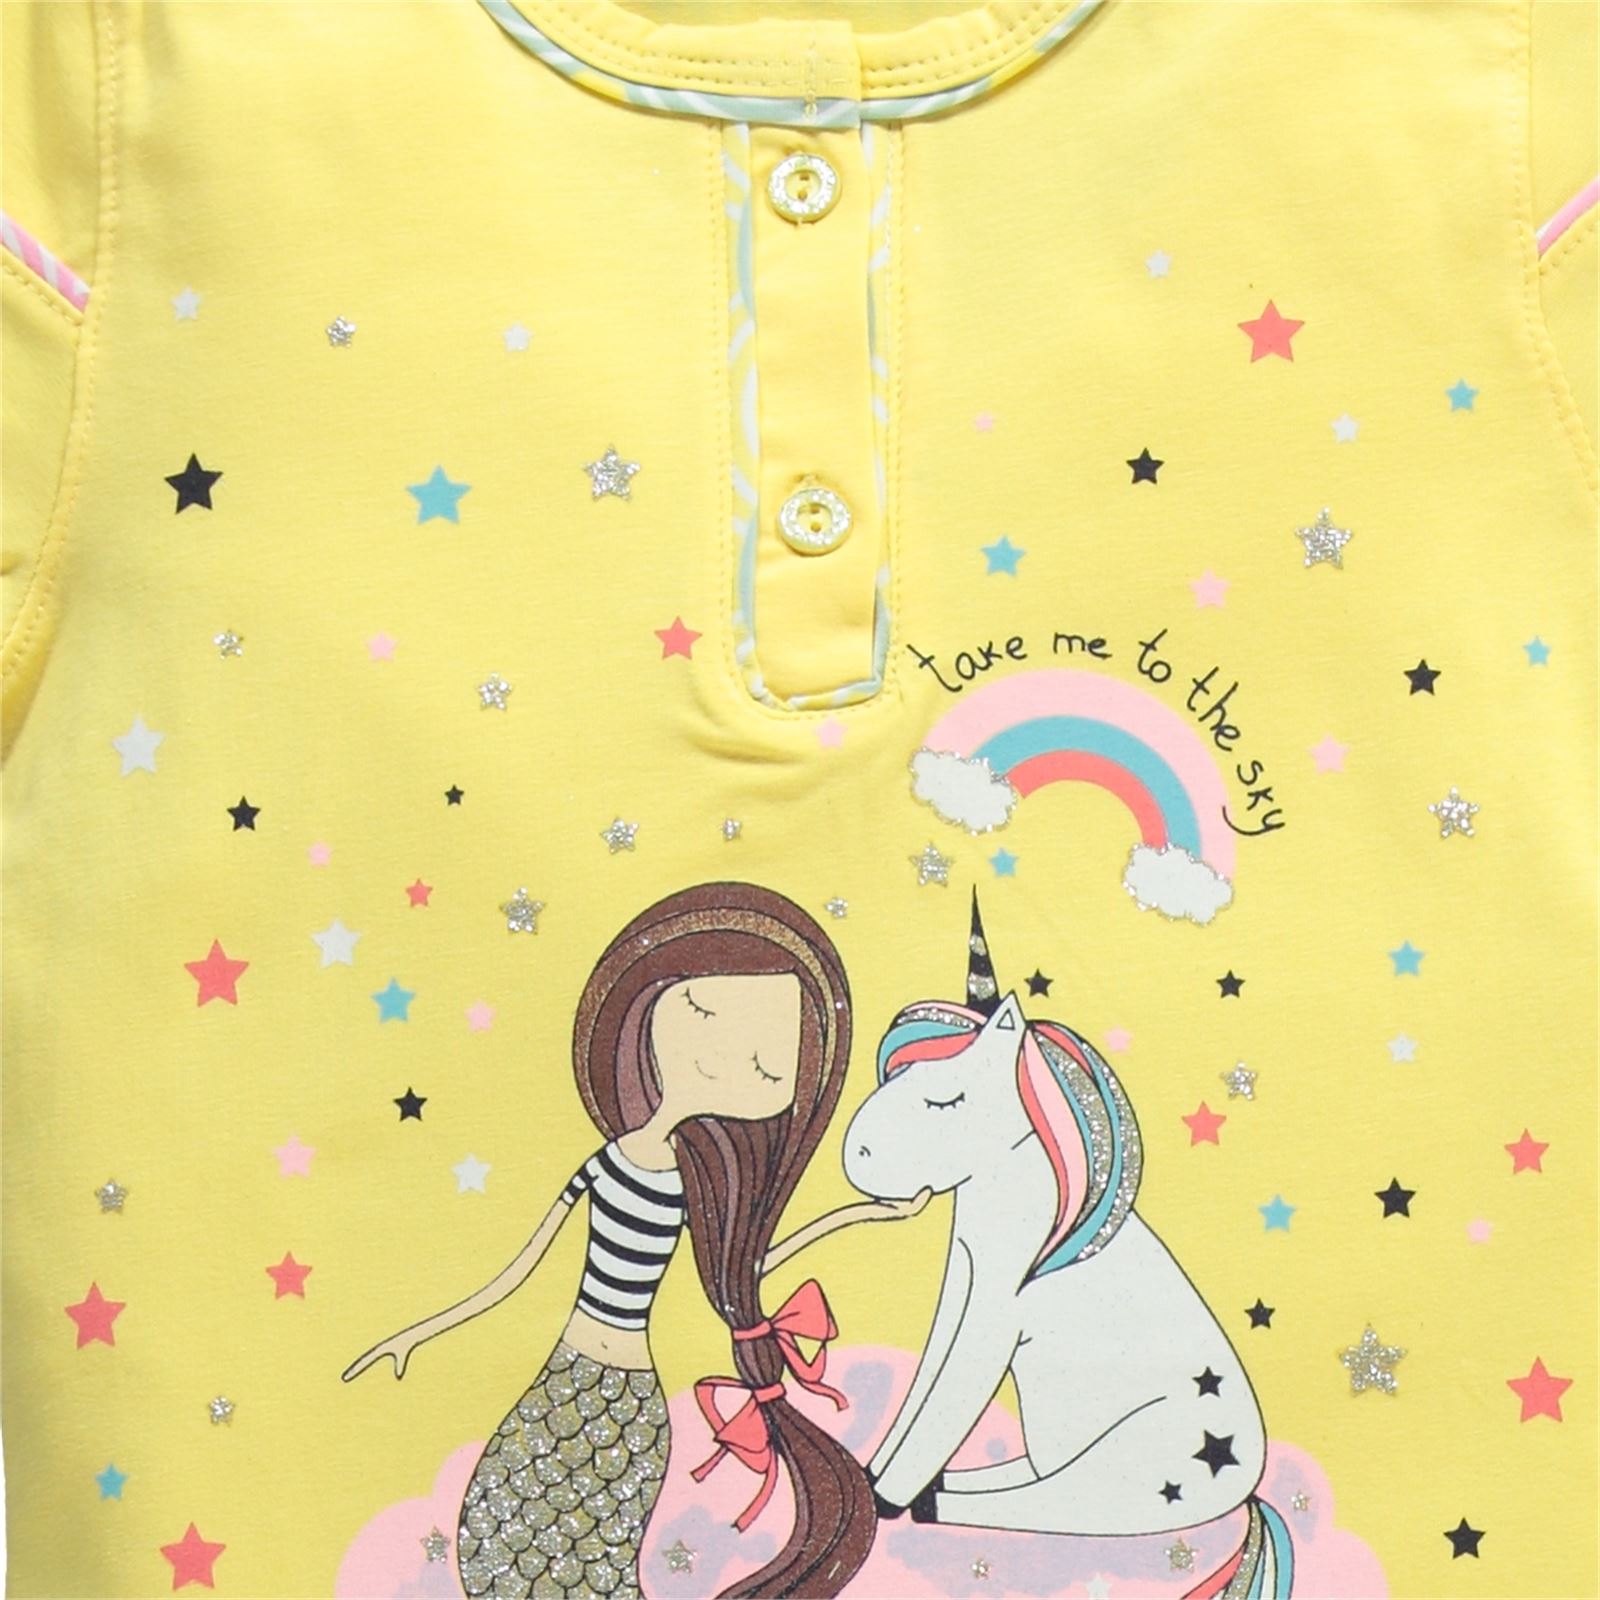 Civil Girls Kız Çocuk Pijama Takımı 6-9 Yaş Sarı